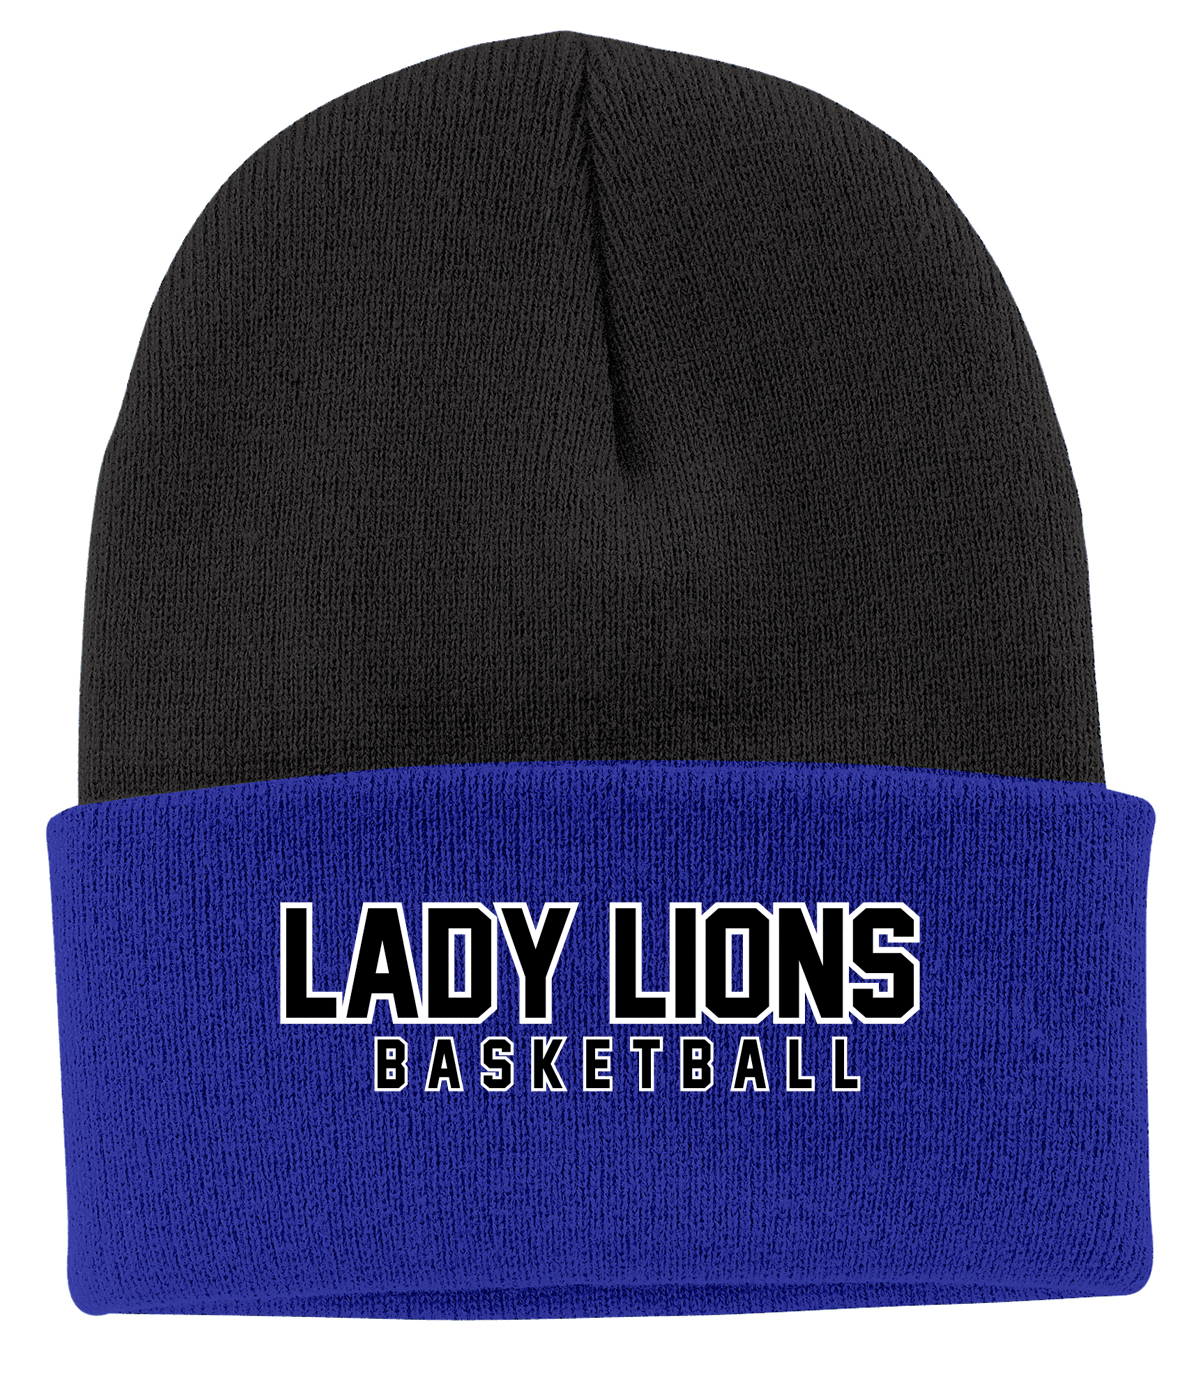 Lady Lions Basketball Knit Beanie